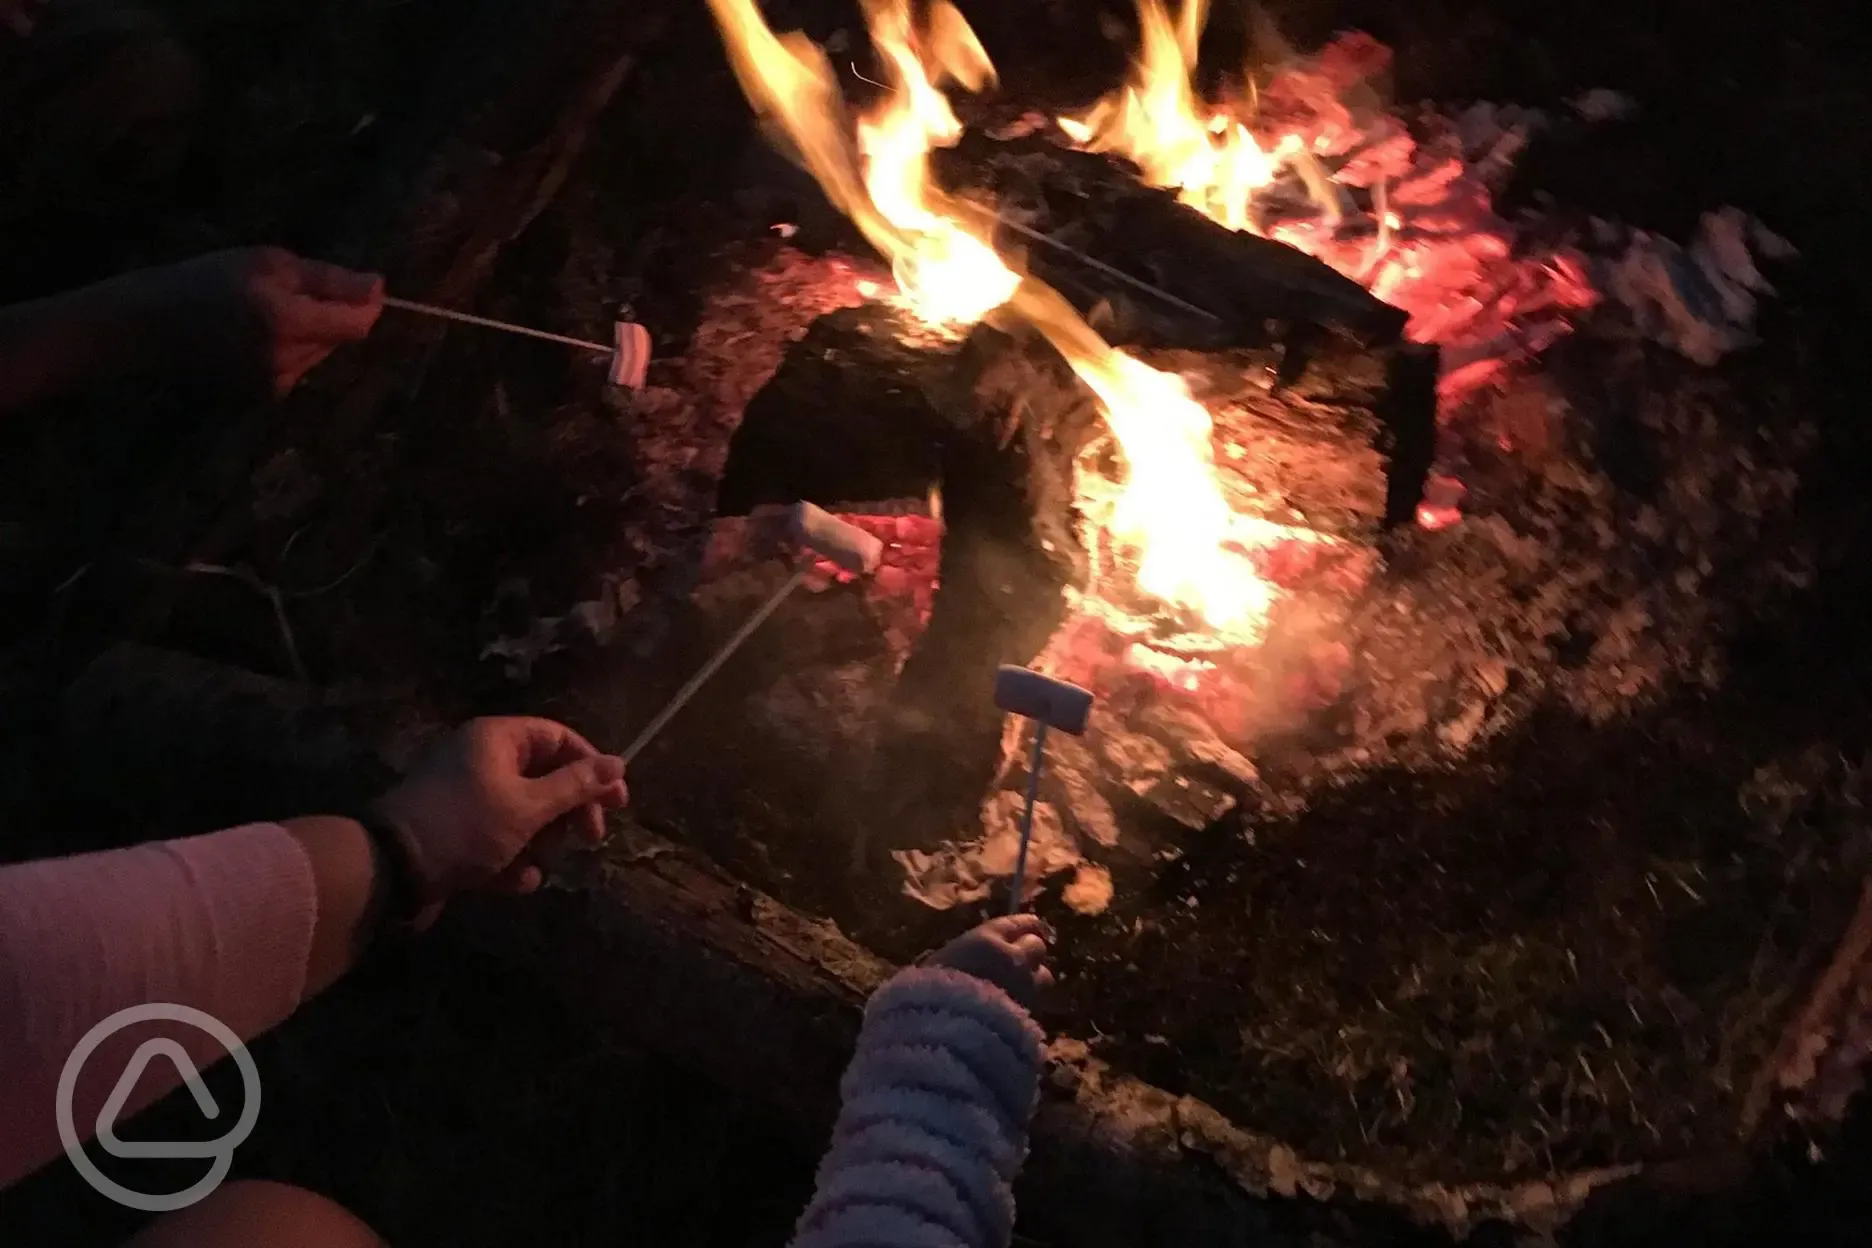 Roasting marshmallows around the fire 